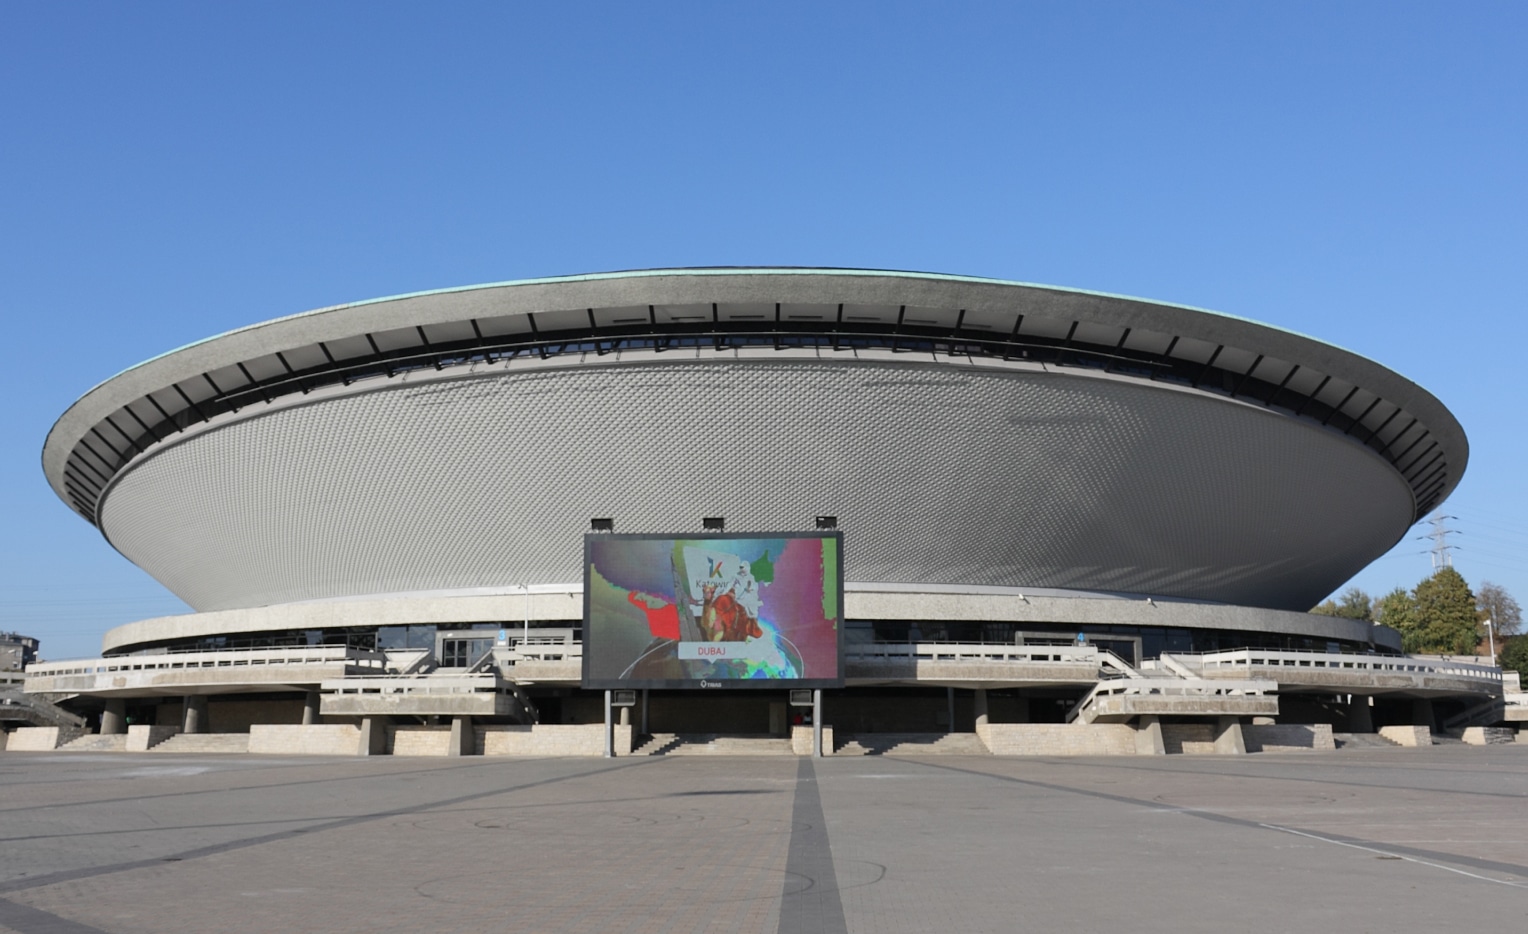 Spodek Arena in Katowice (Polen) - Foto: https://en.wikipedia.org/wiki/Spodek